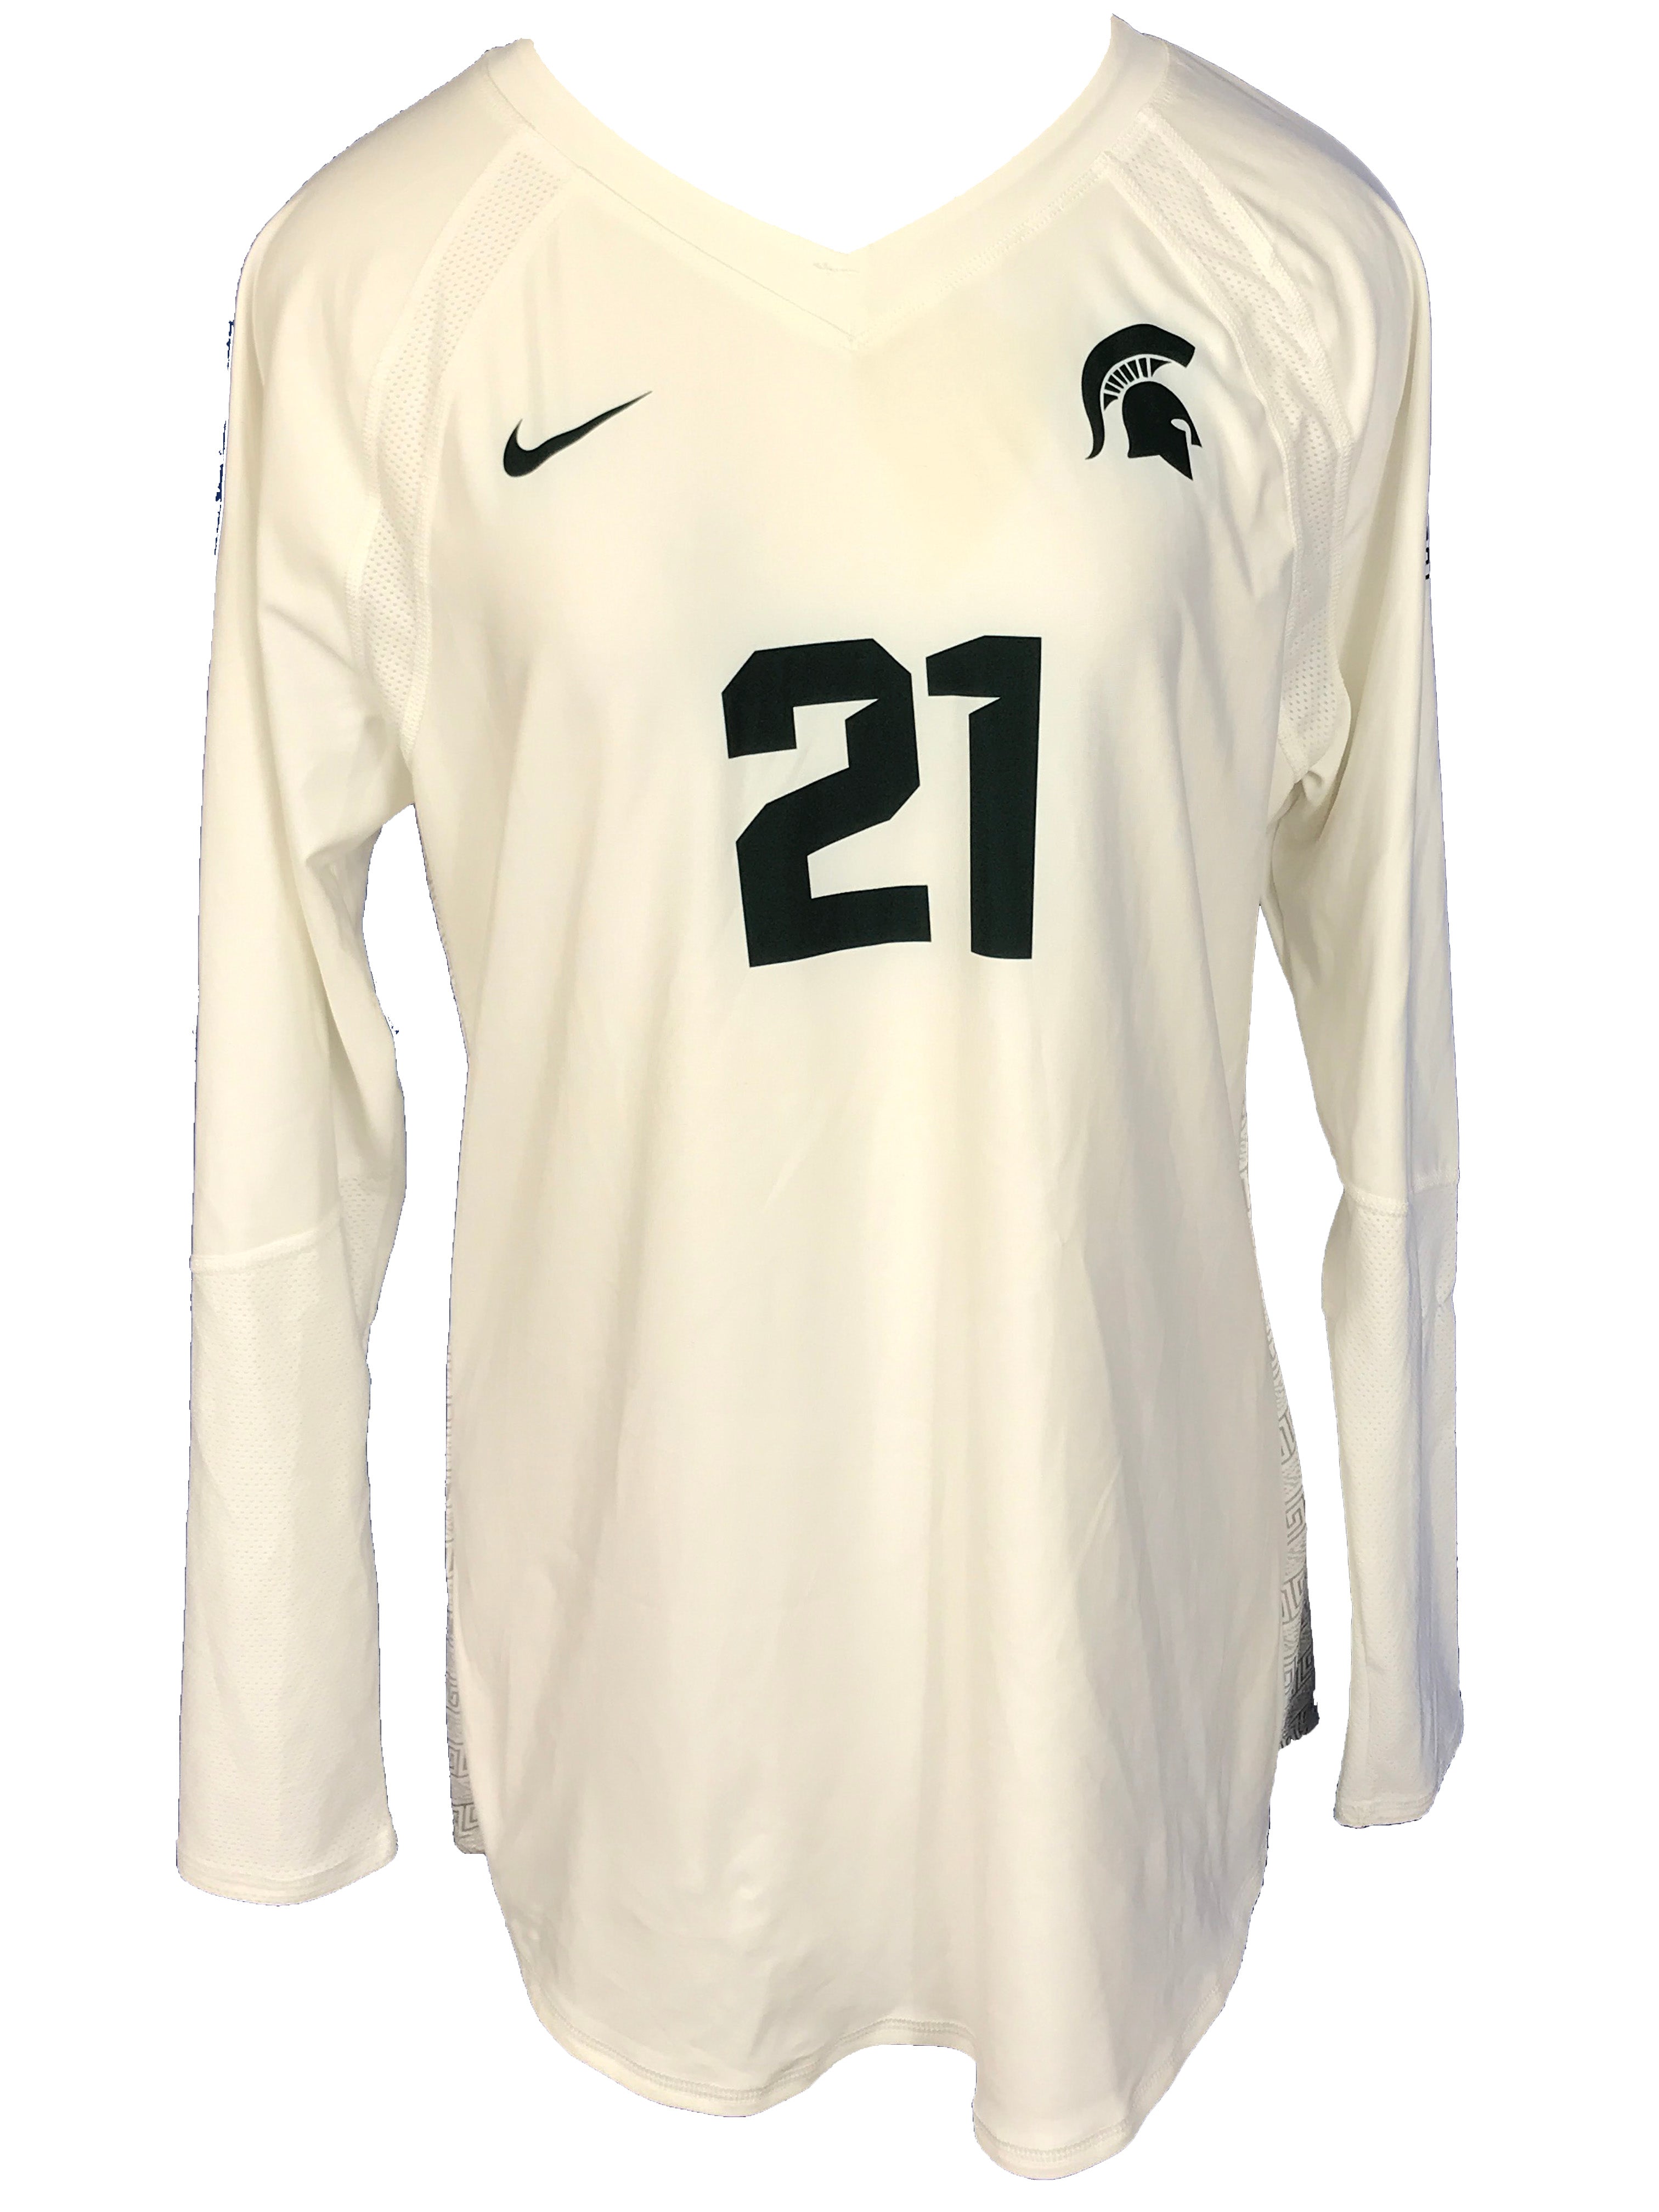 Nike White Long Sleeve MSU Volleyball Jersey #21 Women's Size XL